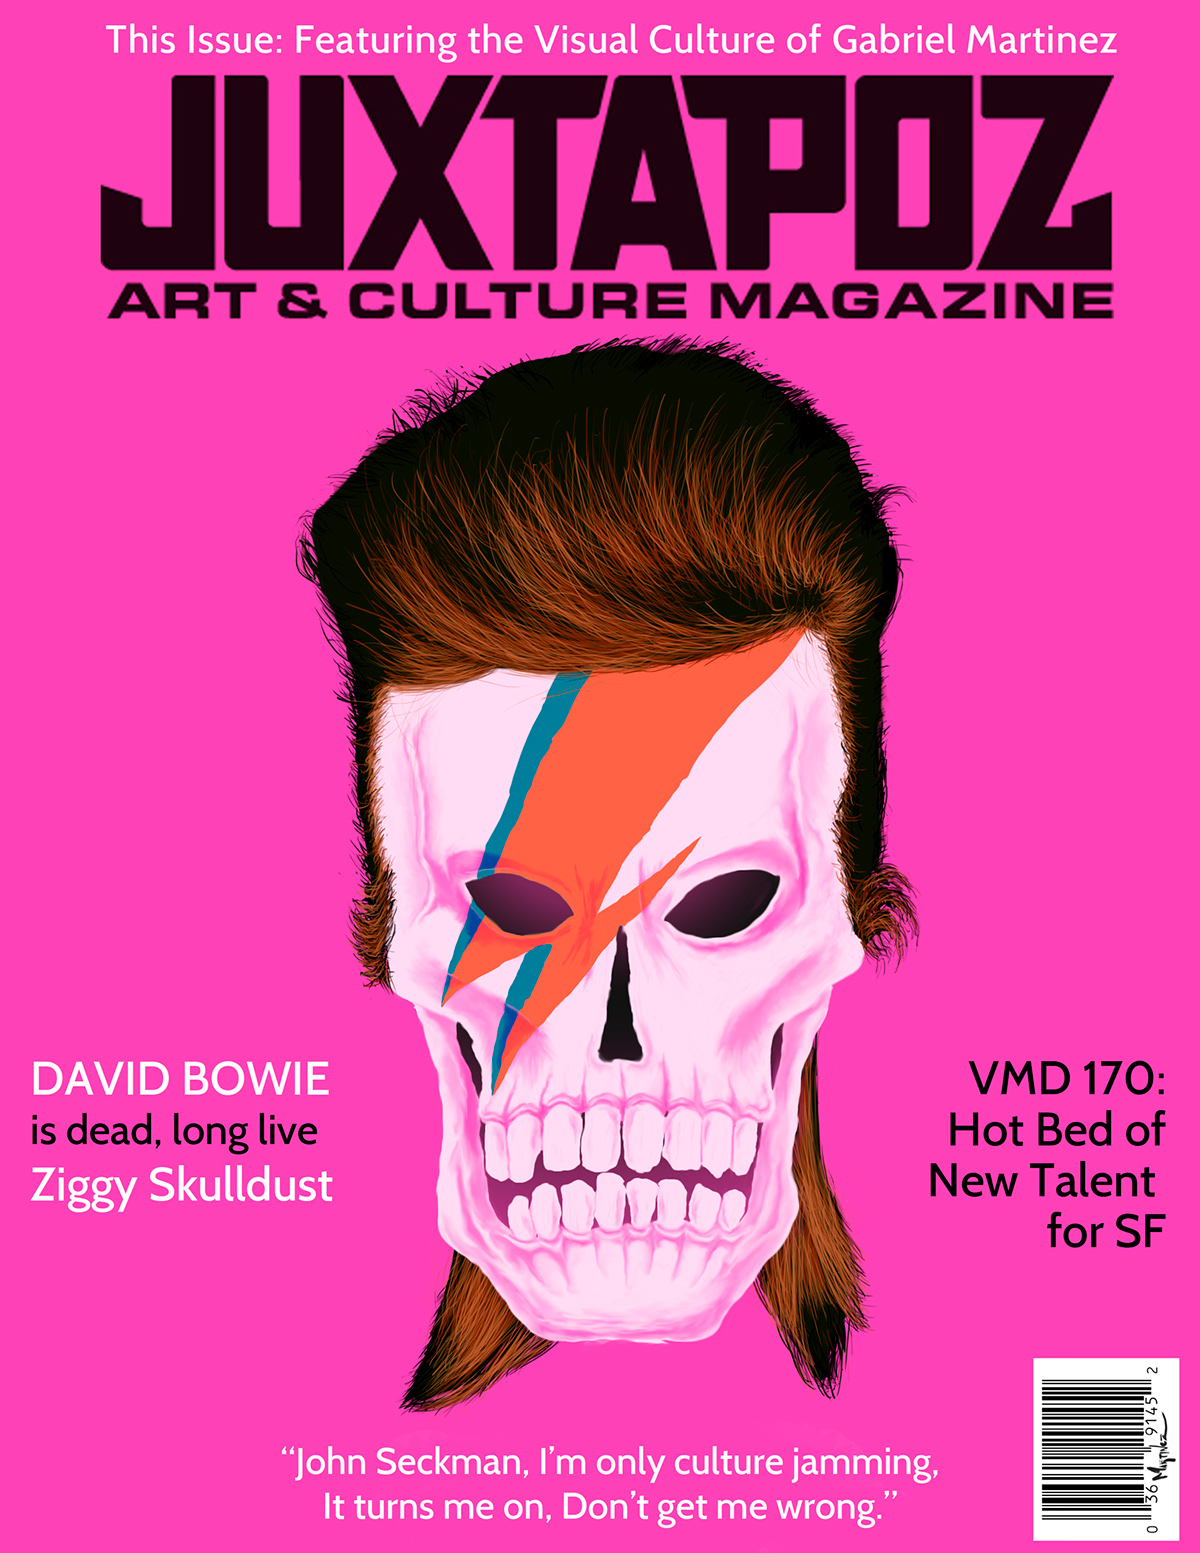 david bowie Ziggy Stardust ILLUSTRATION 